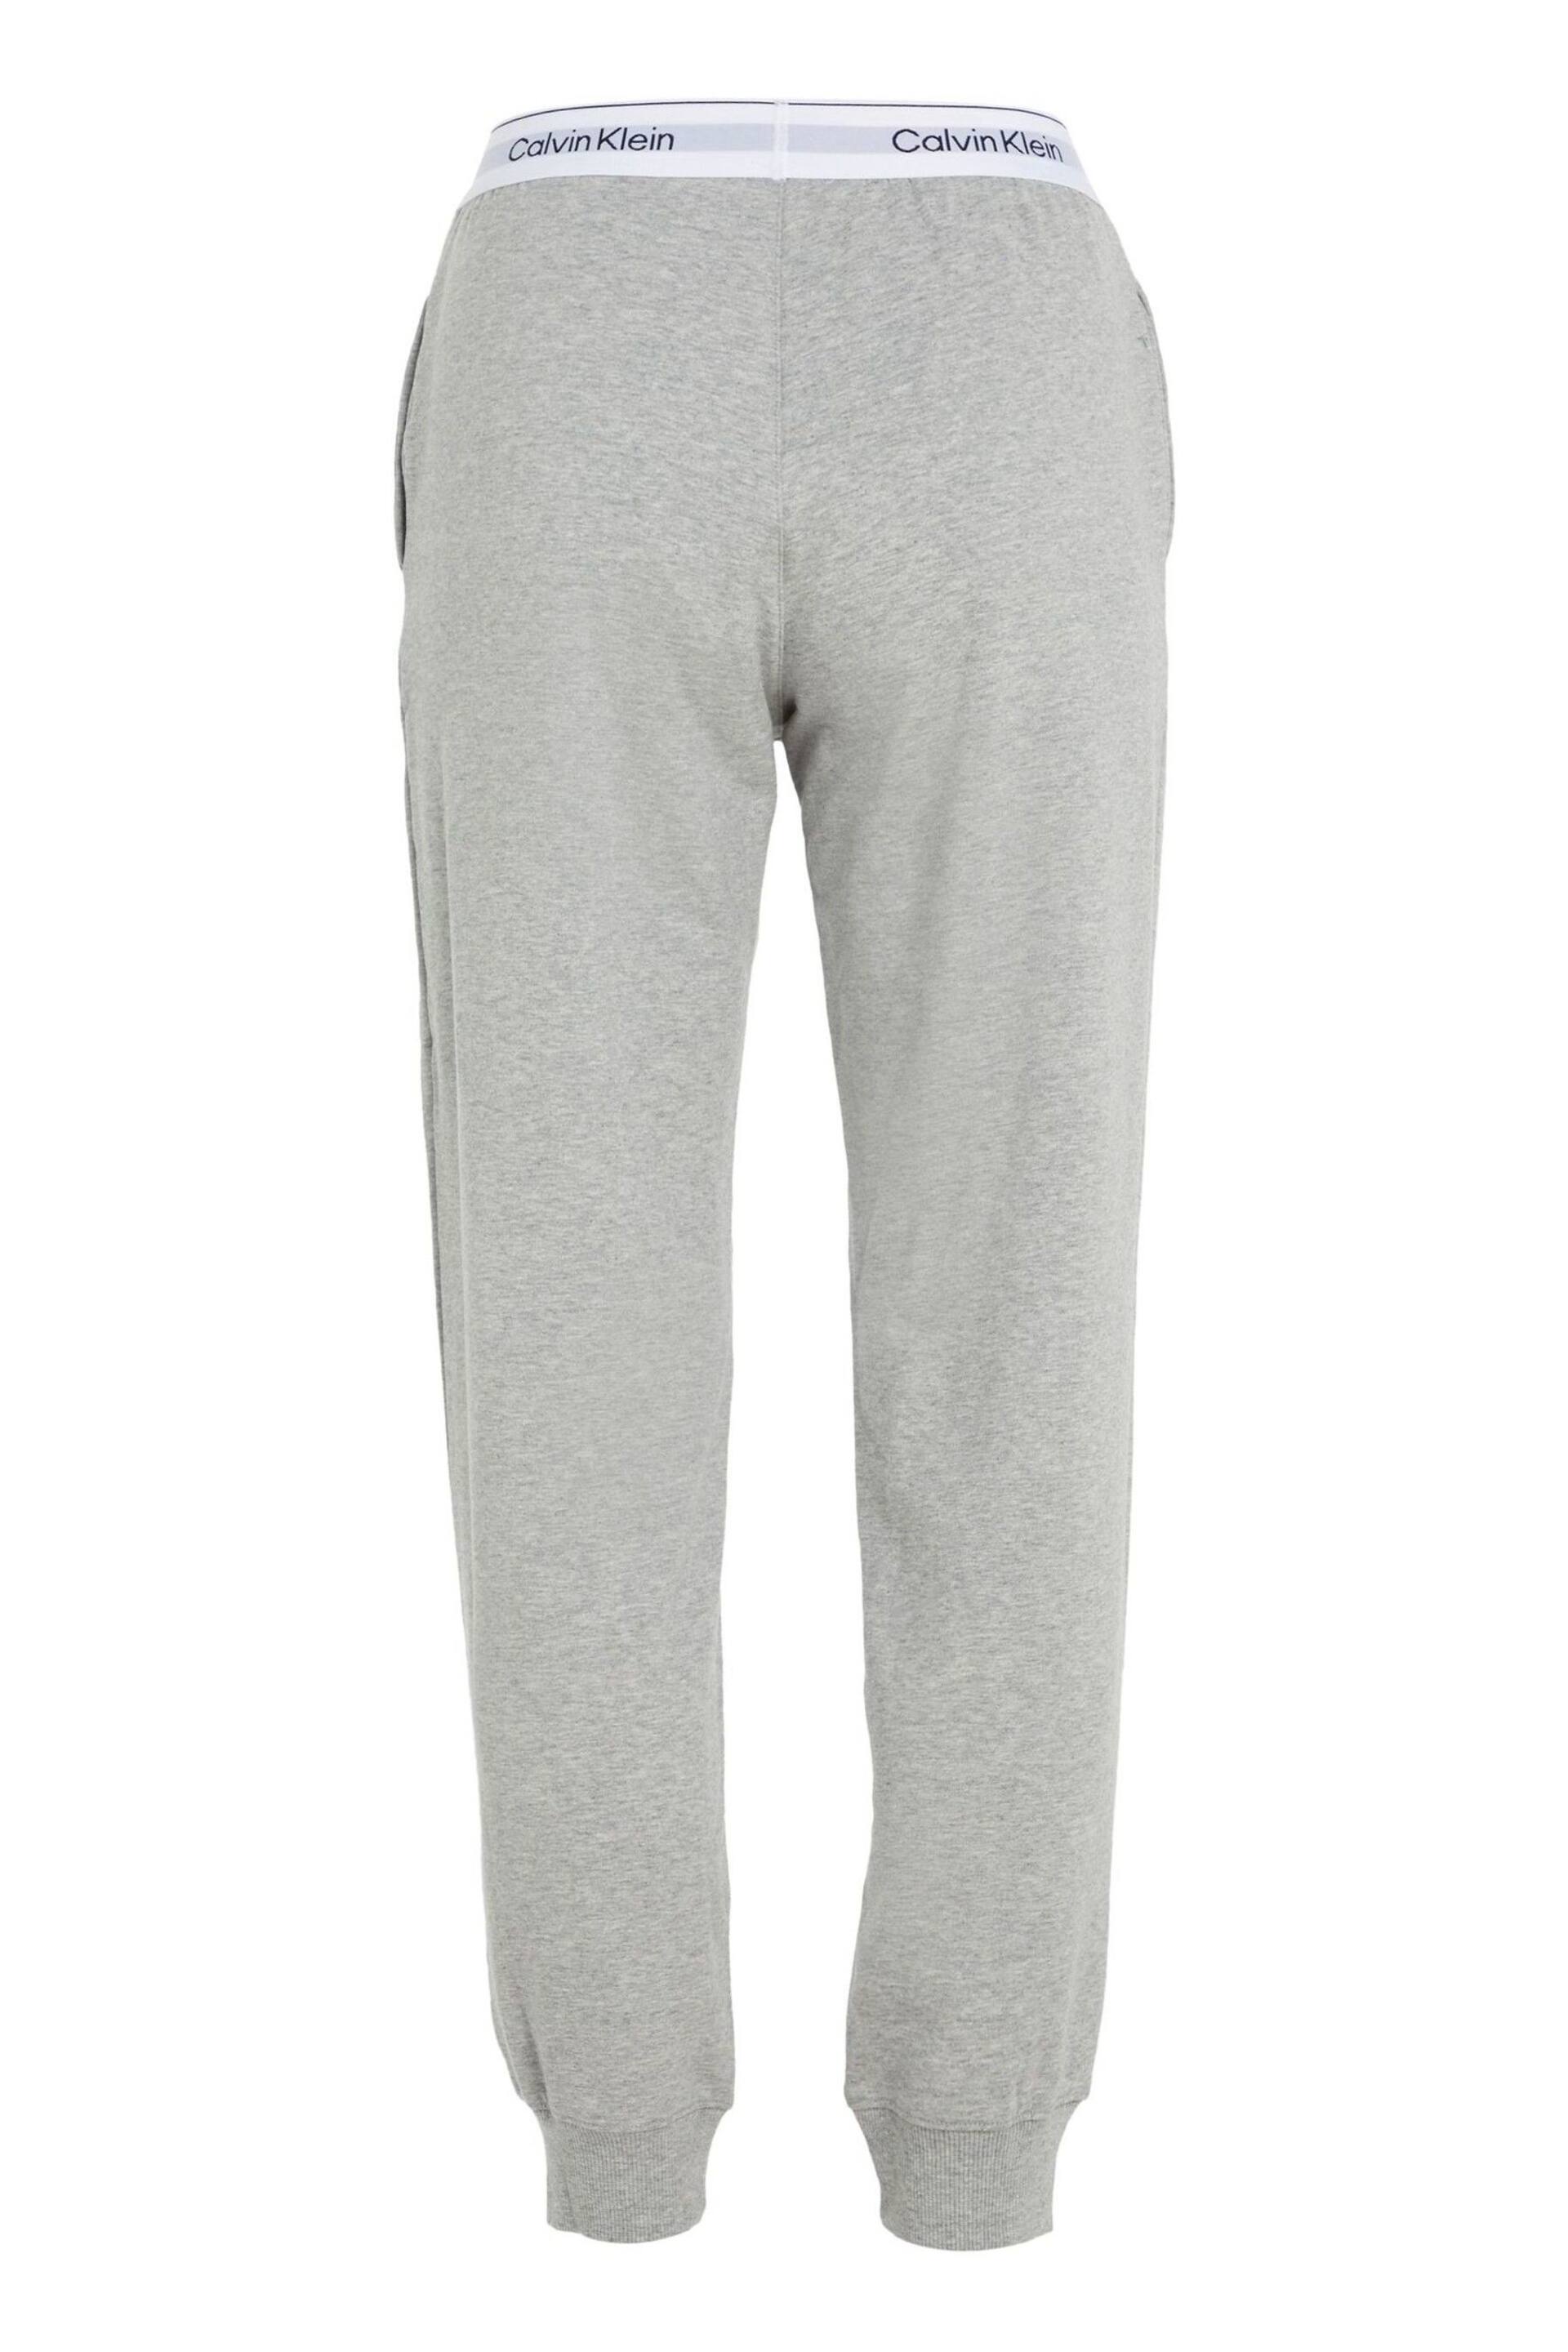 Calvin Klein Grey Modern Cotton Loungewear Joggers - Image 5 of 6